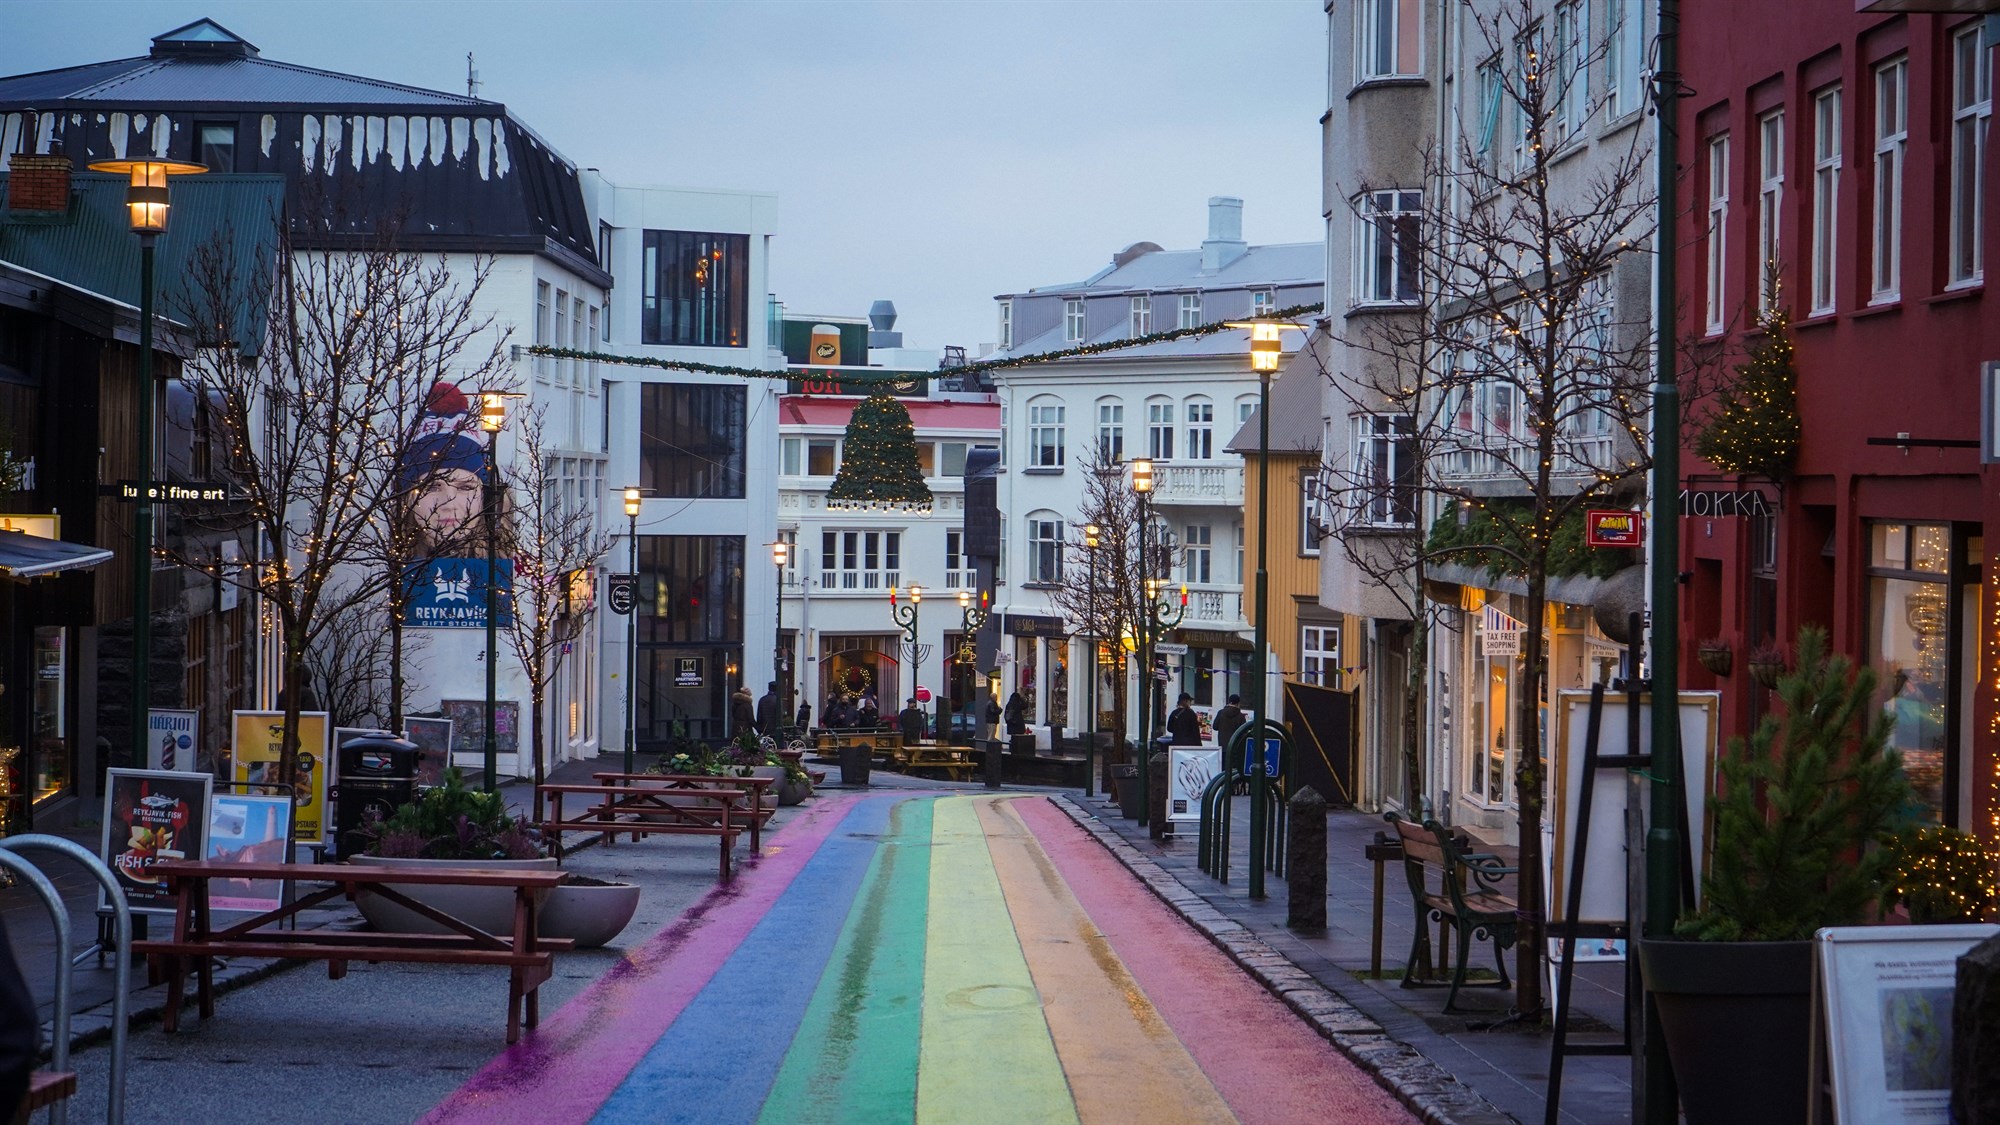 The rainbow street in Reykjavík